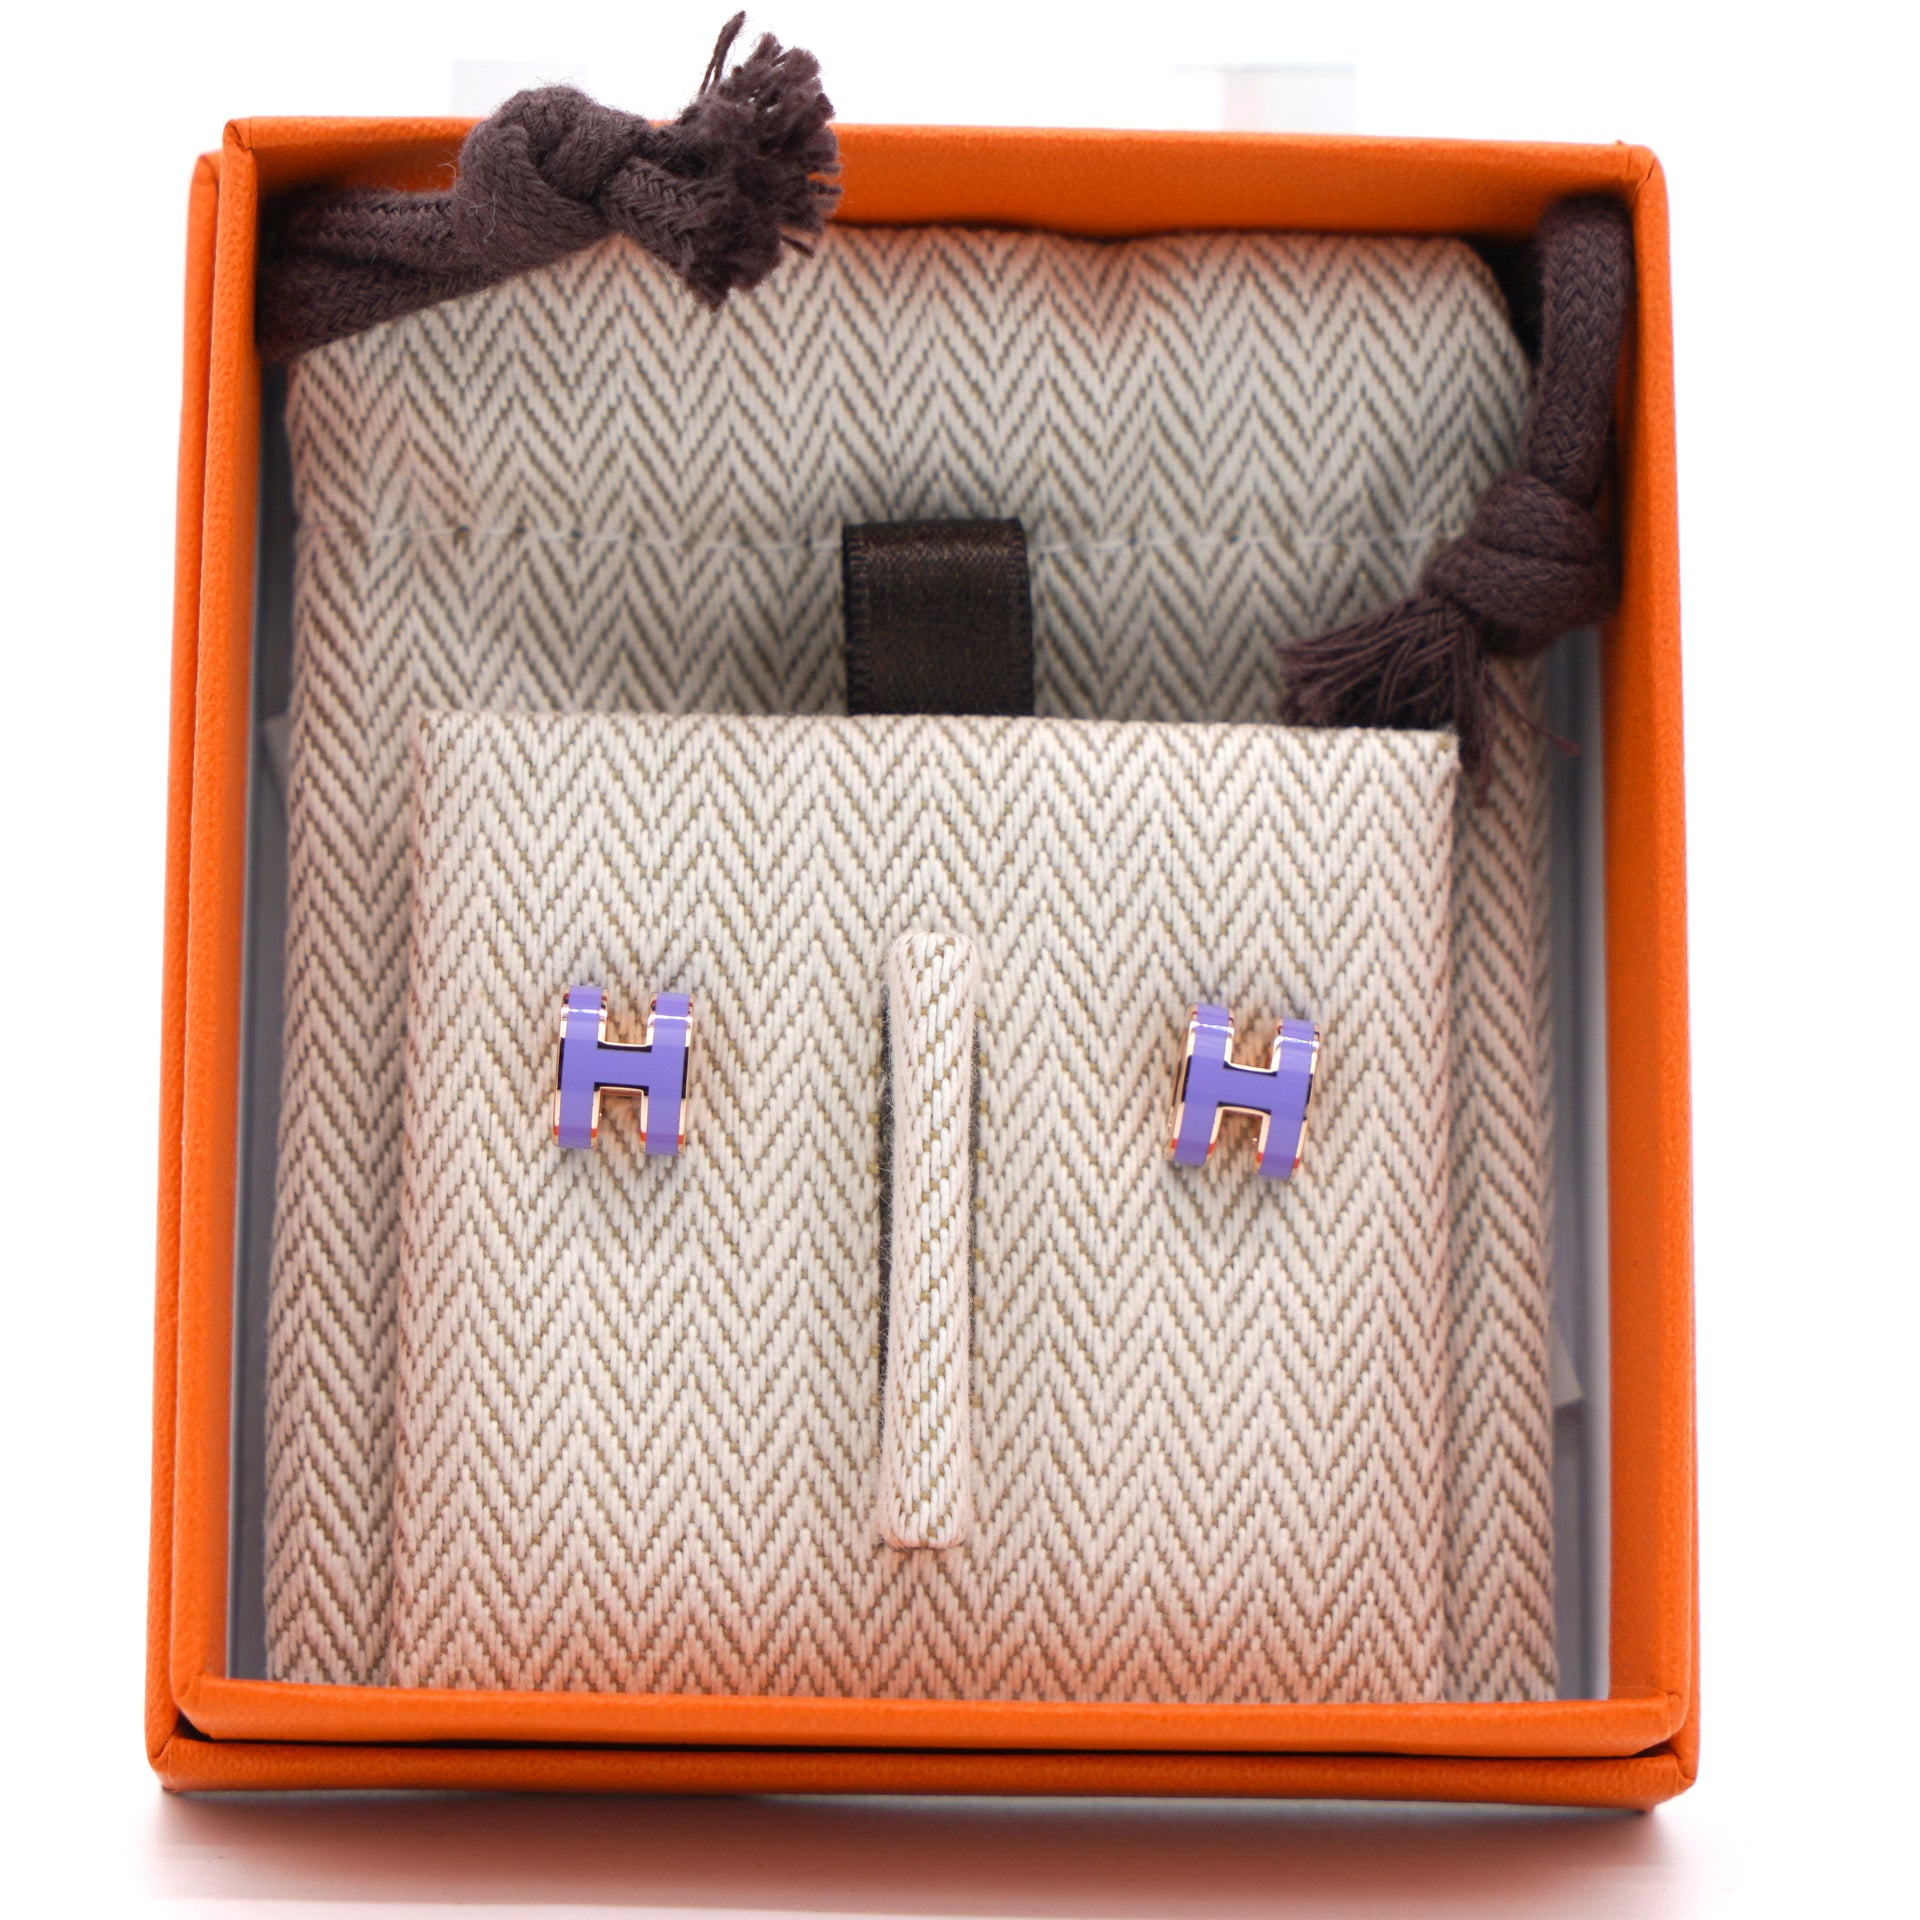 Lacquered Pop H Mini Earrings Purple